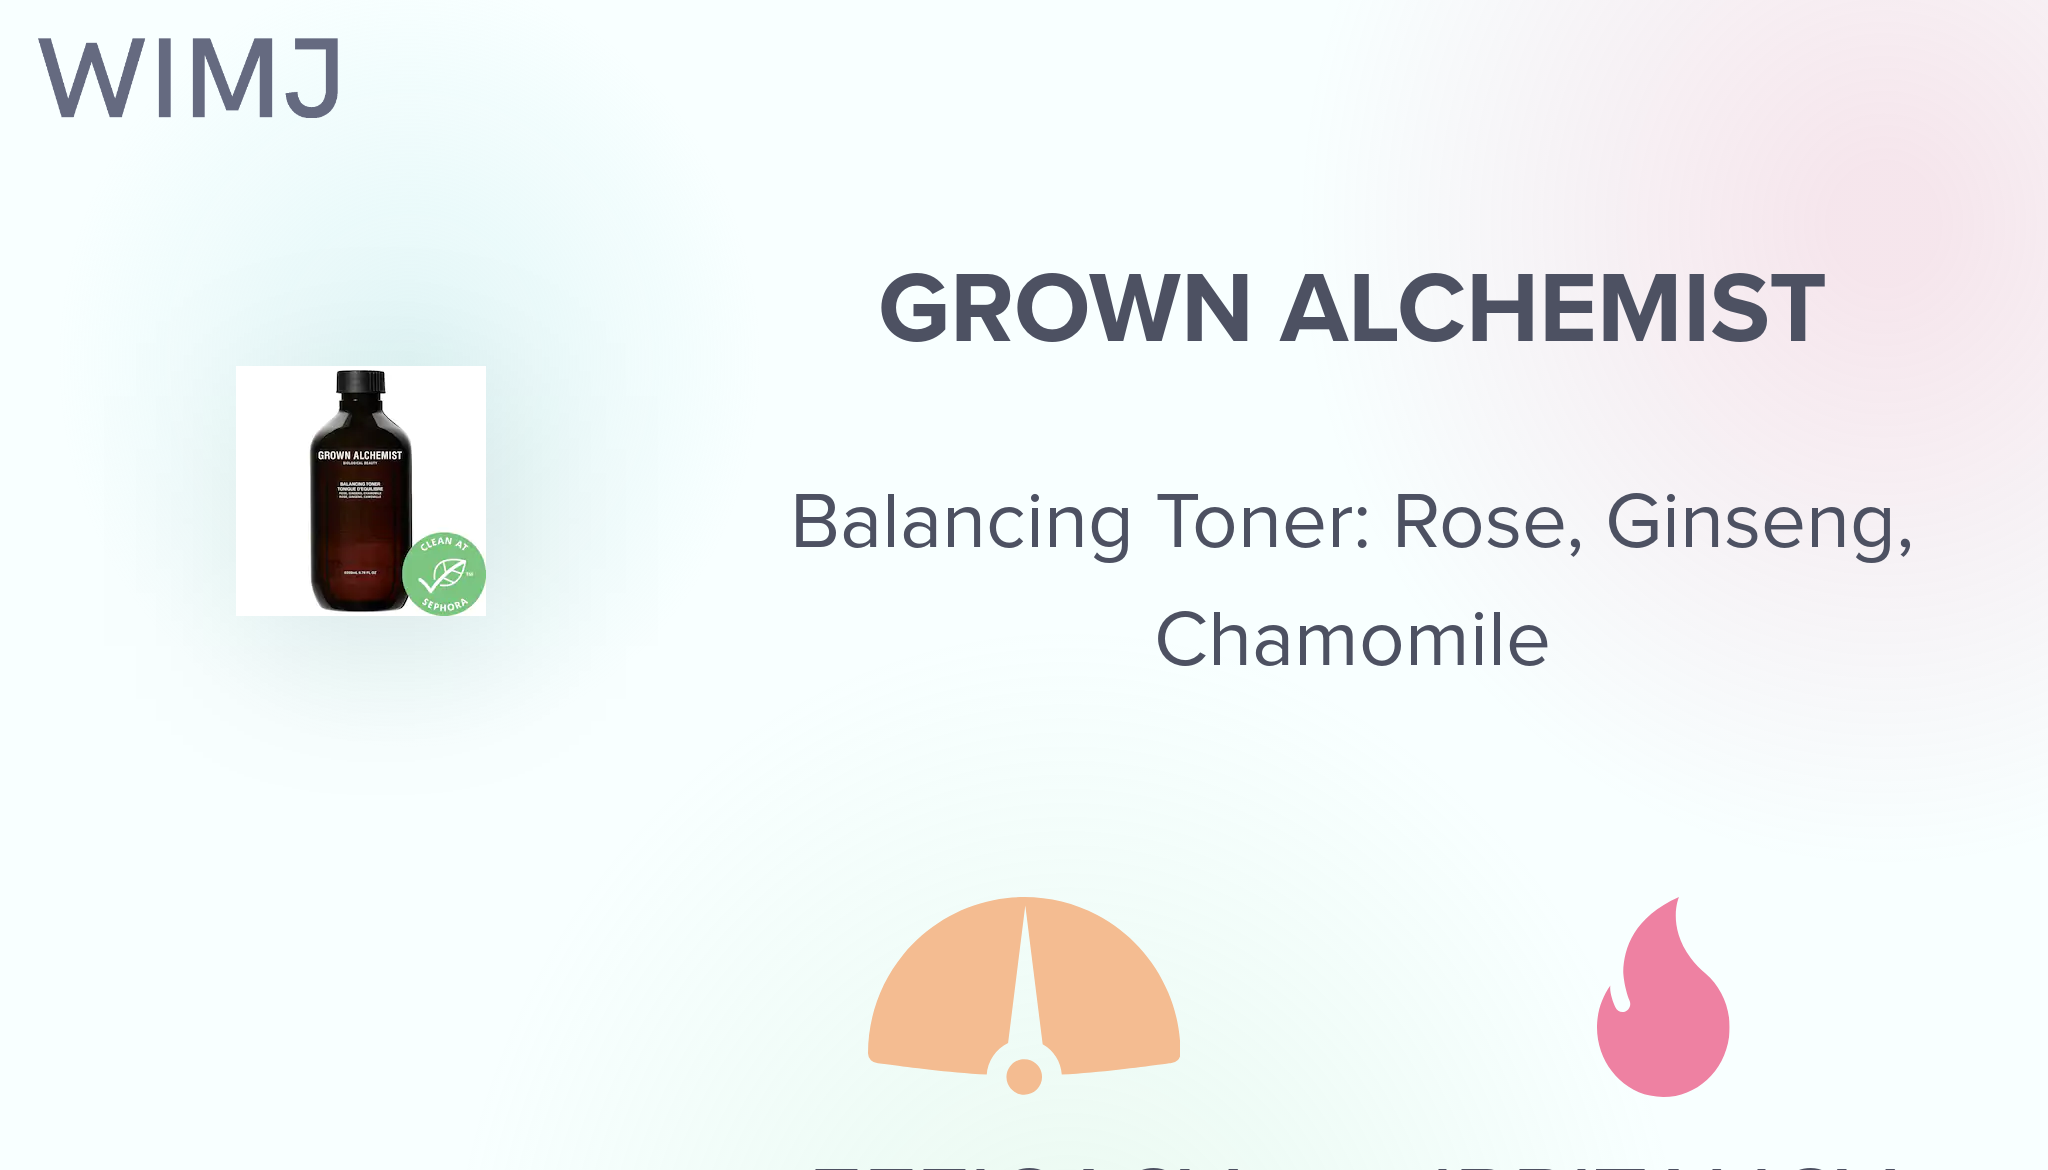 Review: Grown Alchemist - Balancing Toner: Rose, Ginseng, Chamomile - WIMJ